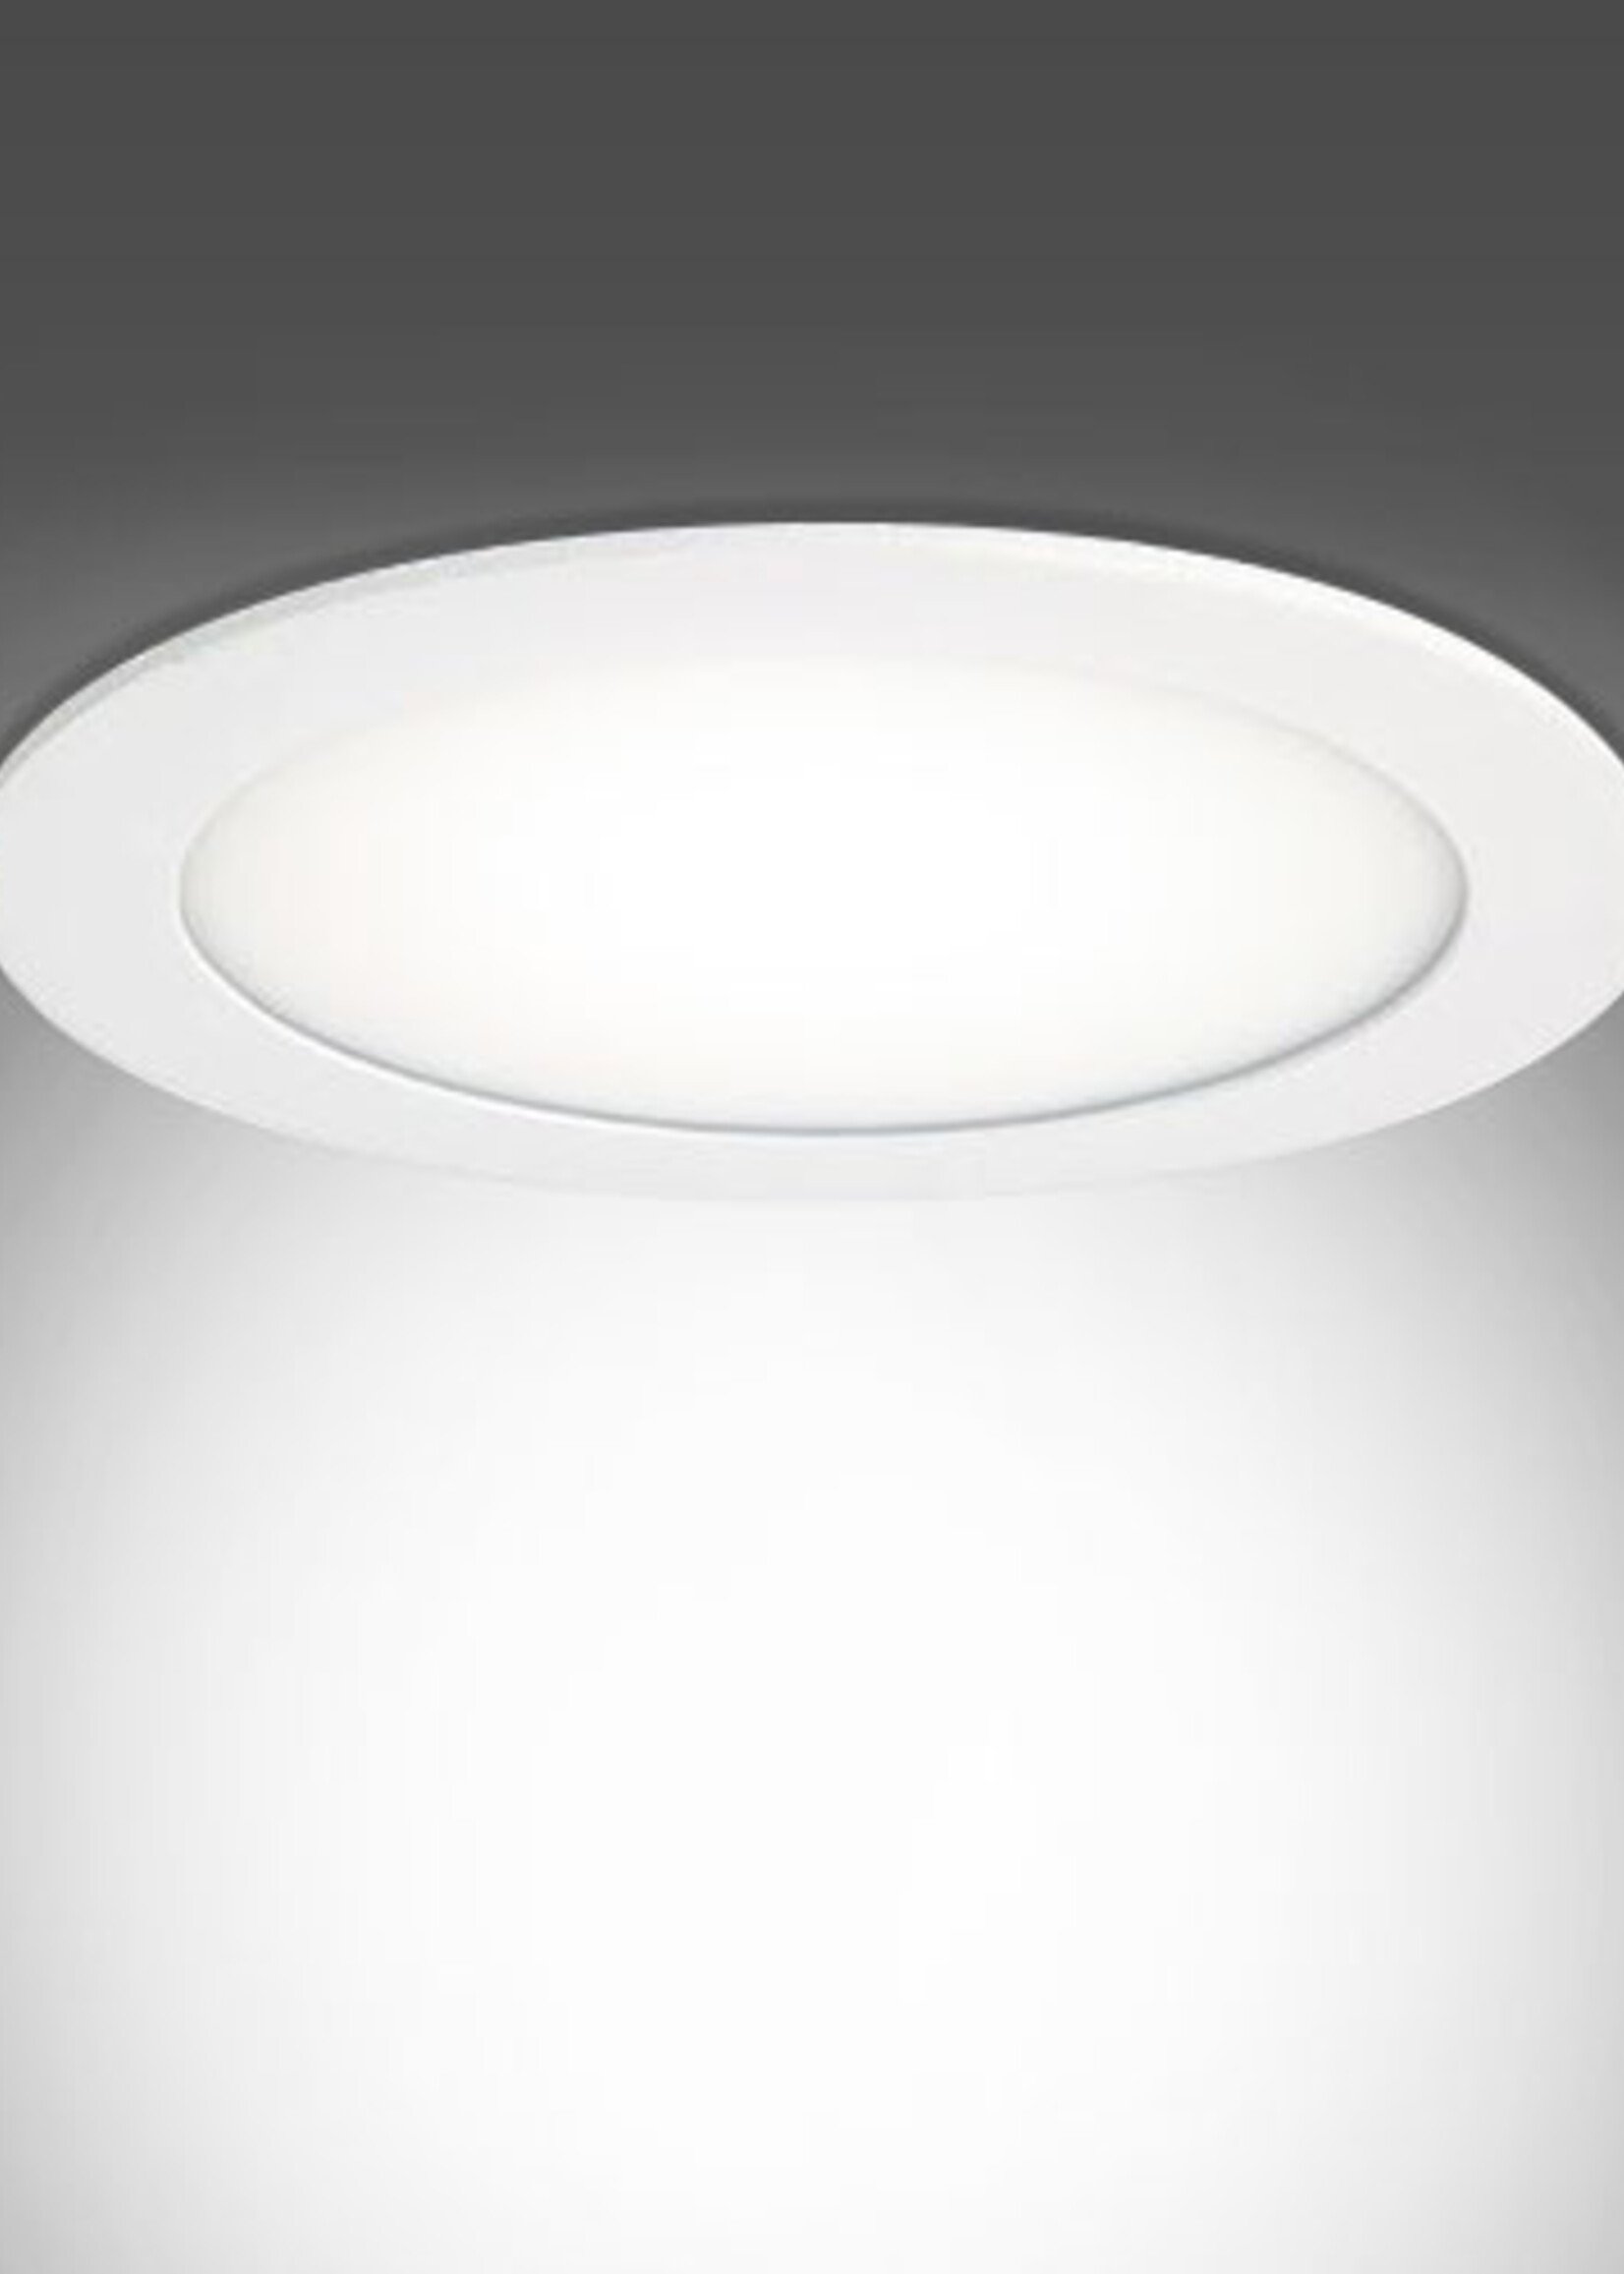 LEDWINKEL-Online LED Downlight ⌀170mm 12W dimmable recessed